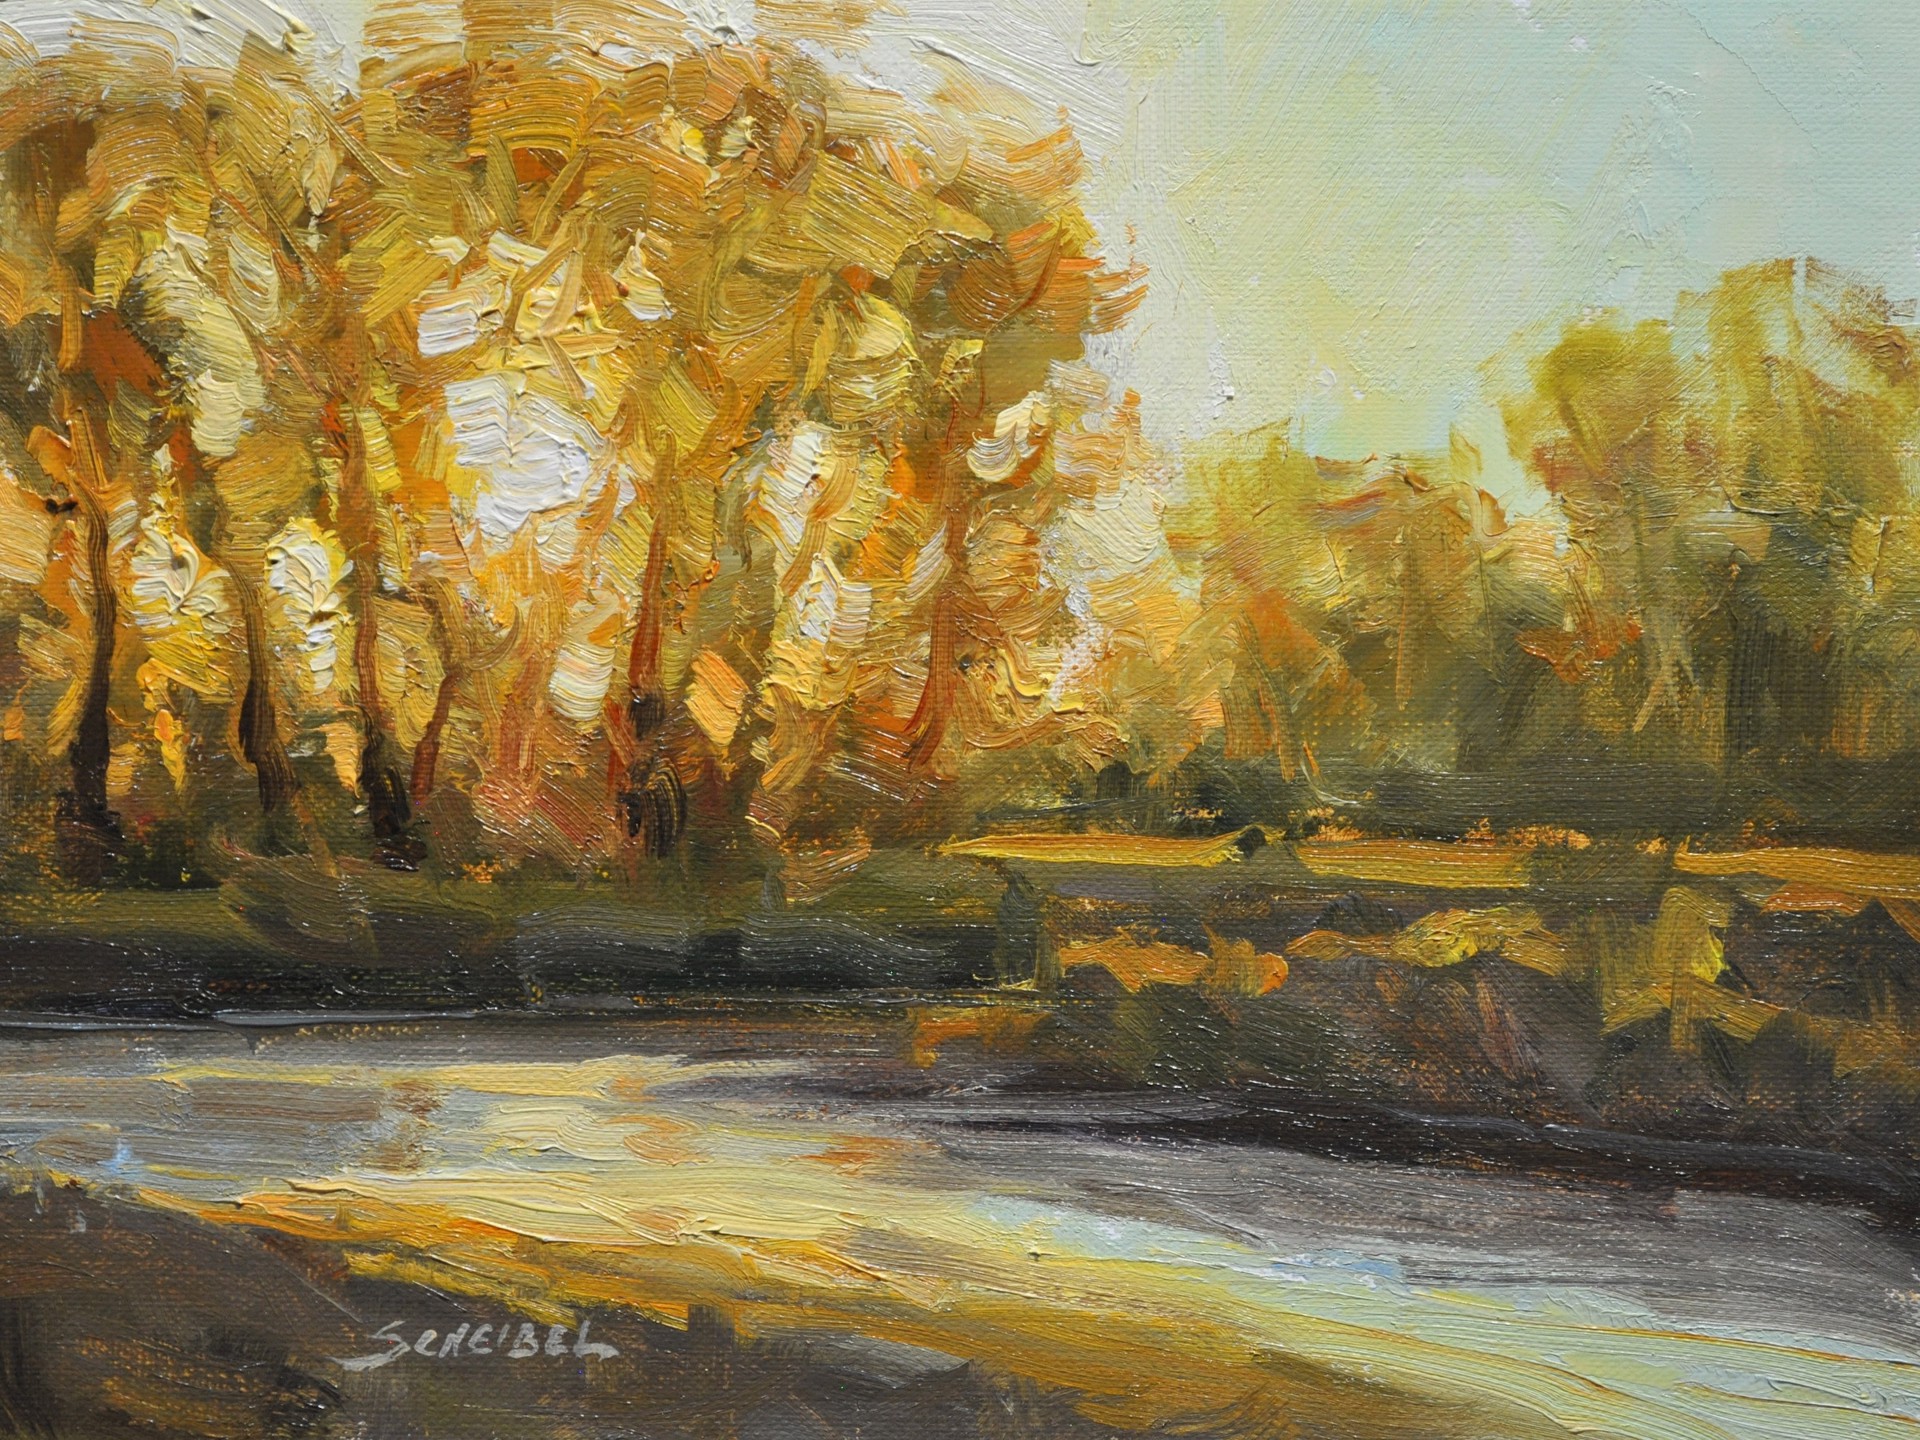 SHIELDS RIVER SUNSET by Greg Scheibel